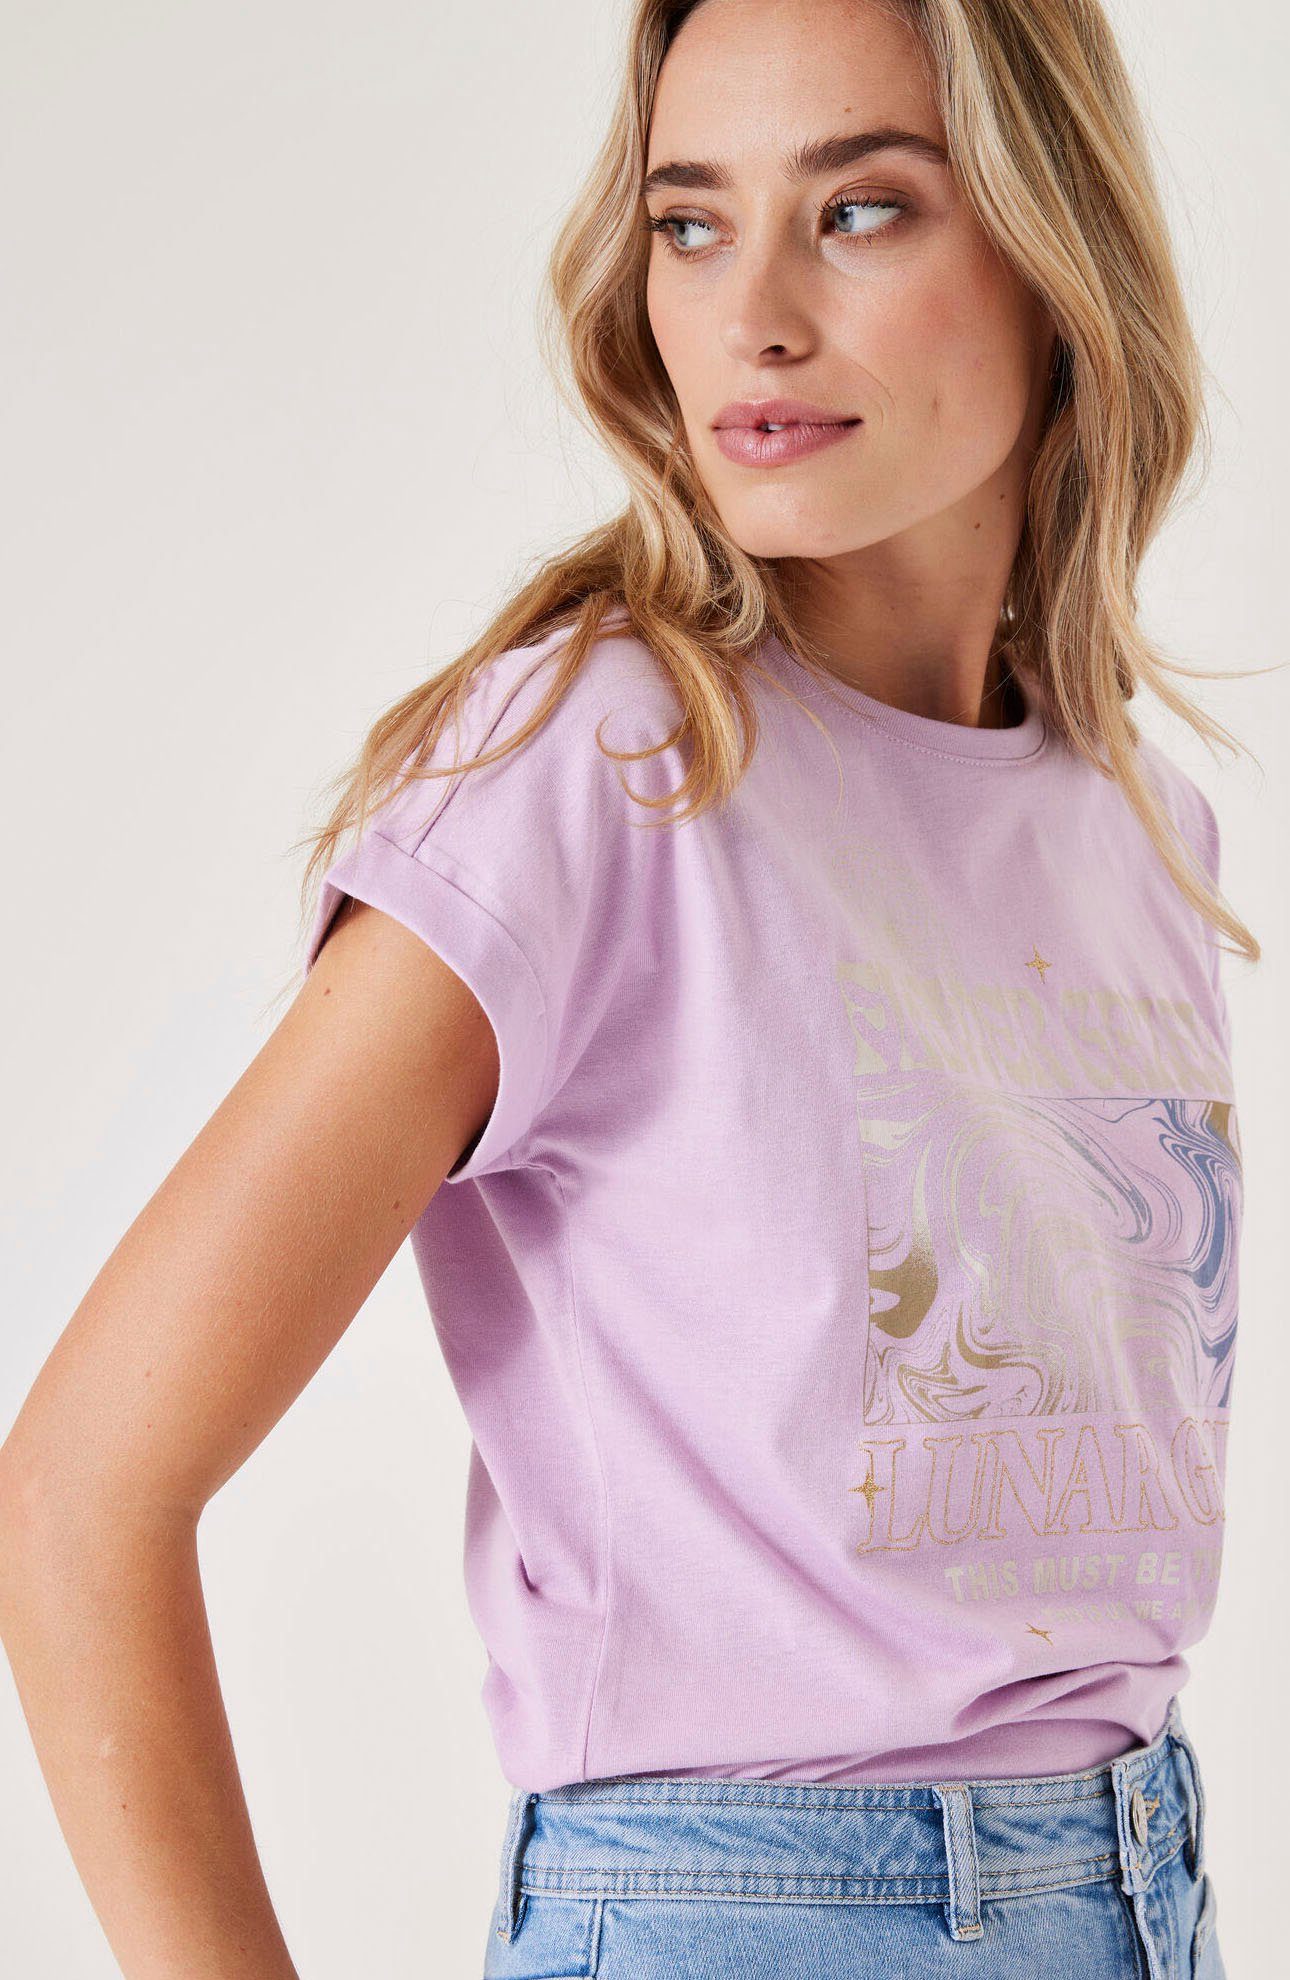 Garcia fragnant lil Print-Shirt